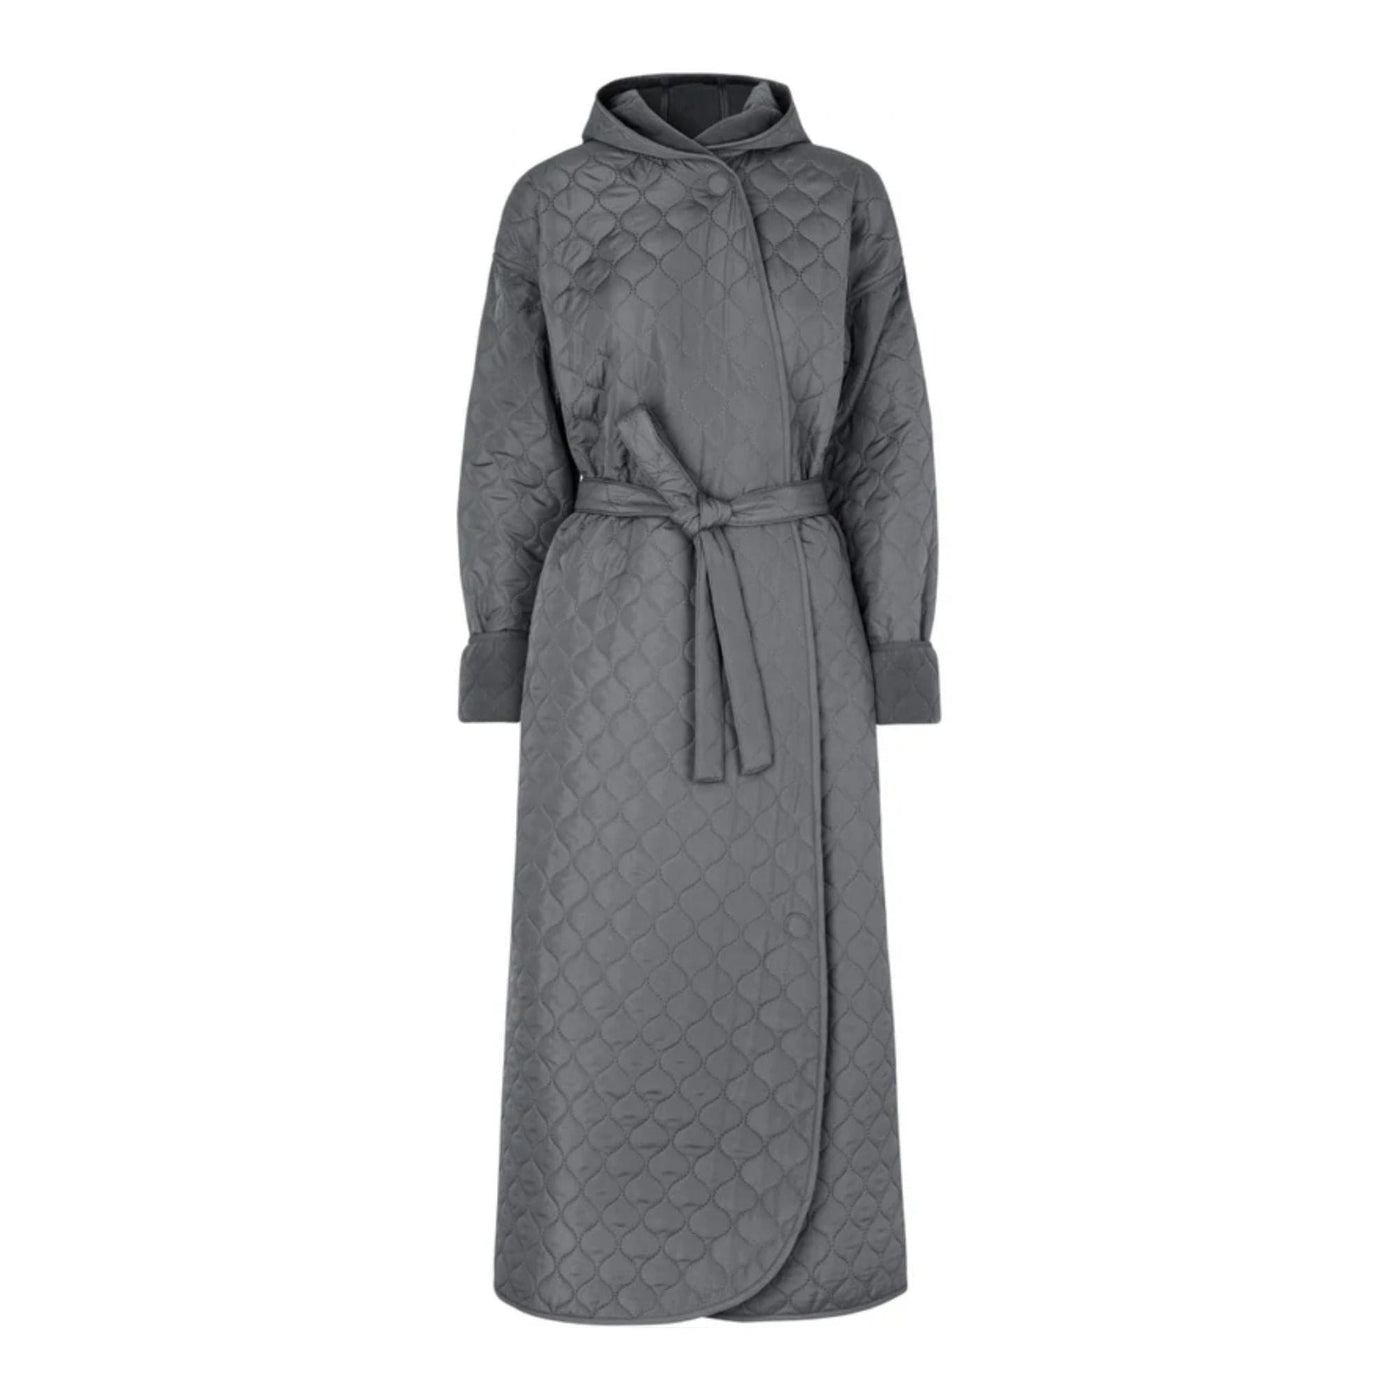 NORDBAEK Coats & Jackets Anthracite Grey / Small Women's Windy Ocean Outdoor Bathrobe